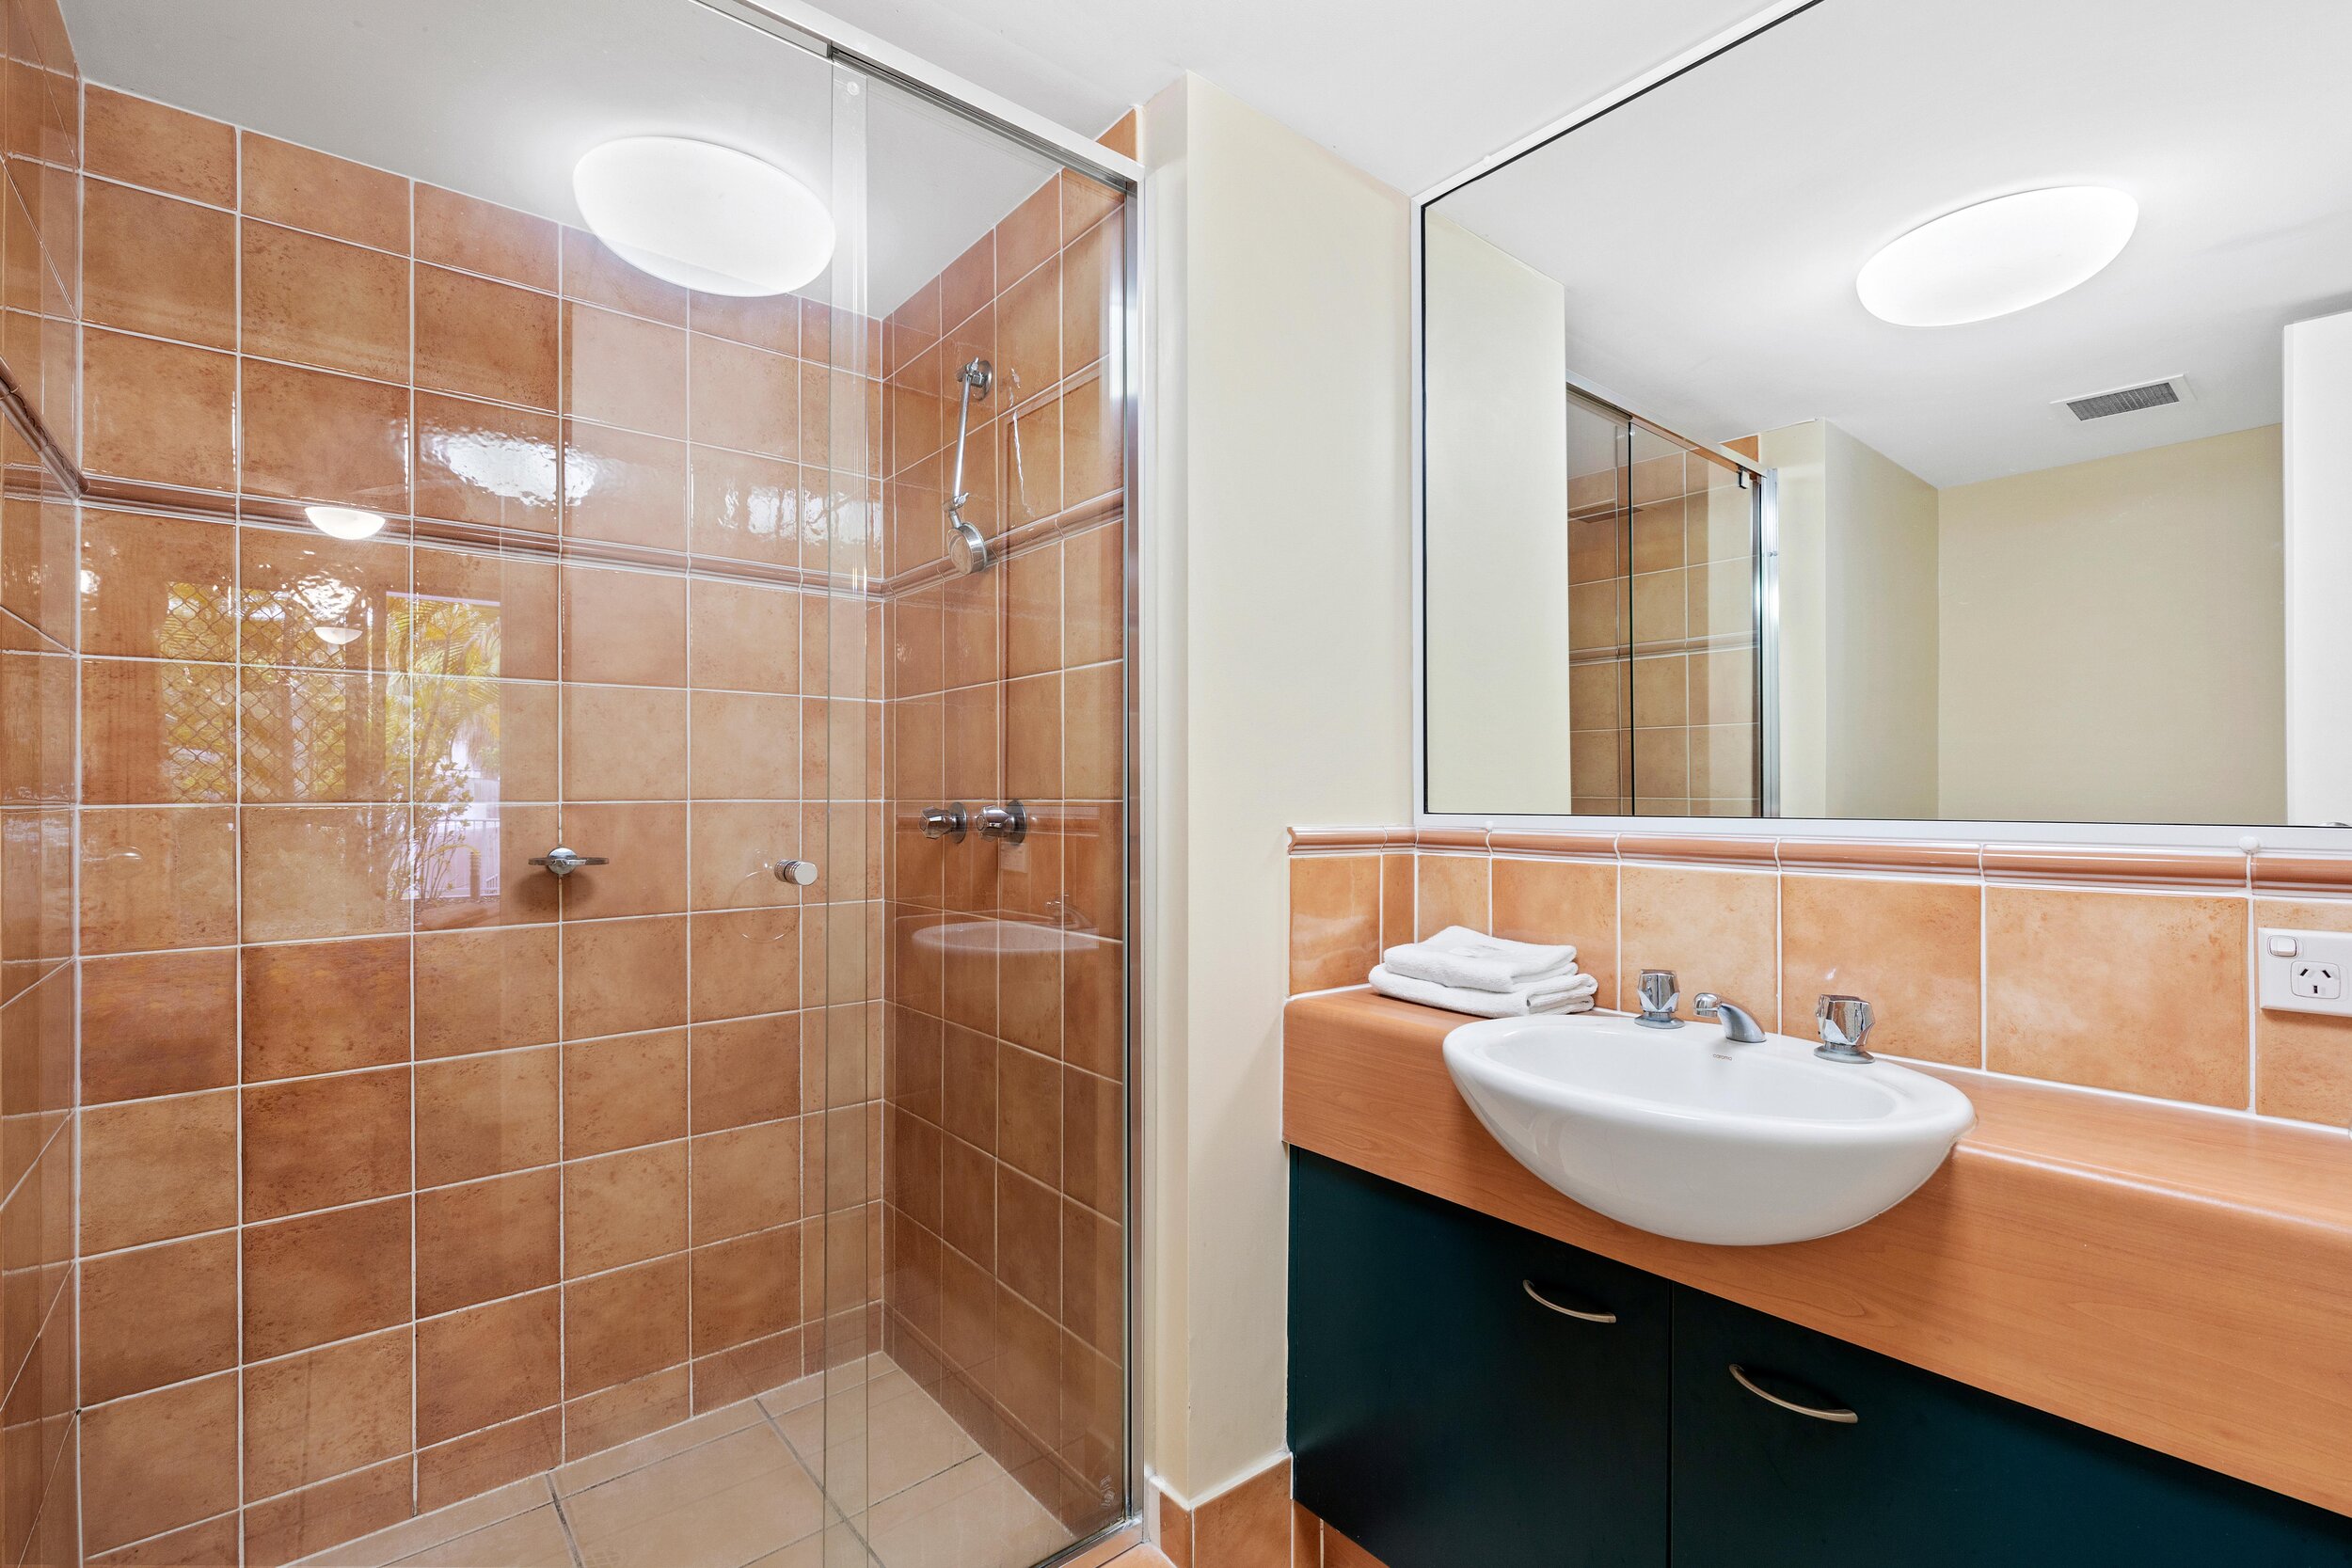 Kings-Bay-Apartments-bathroom5.jpg